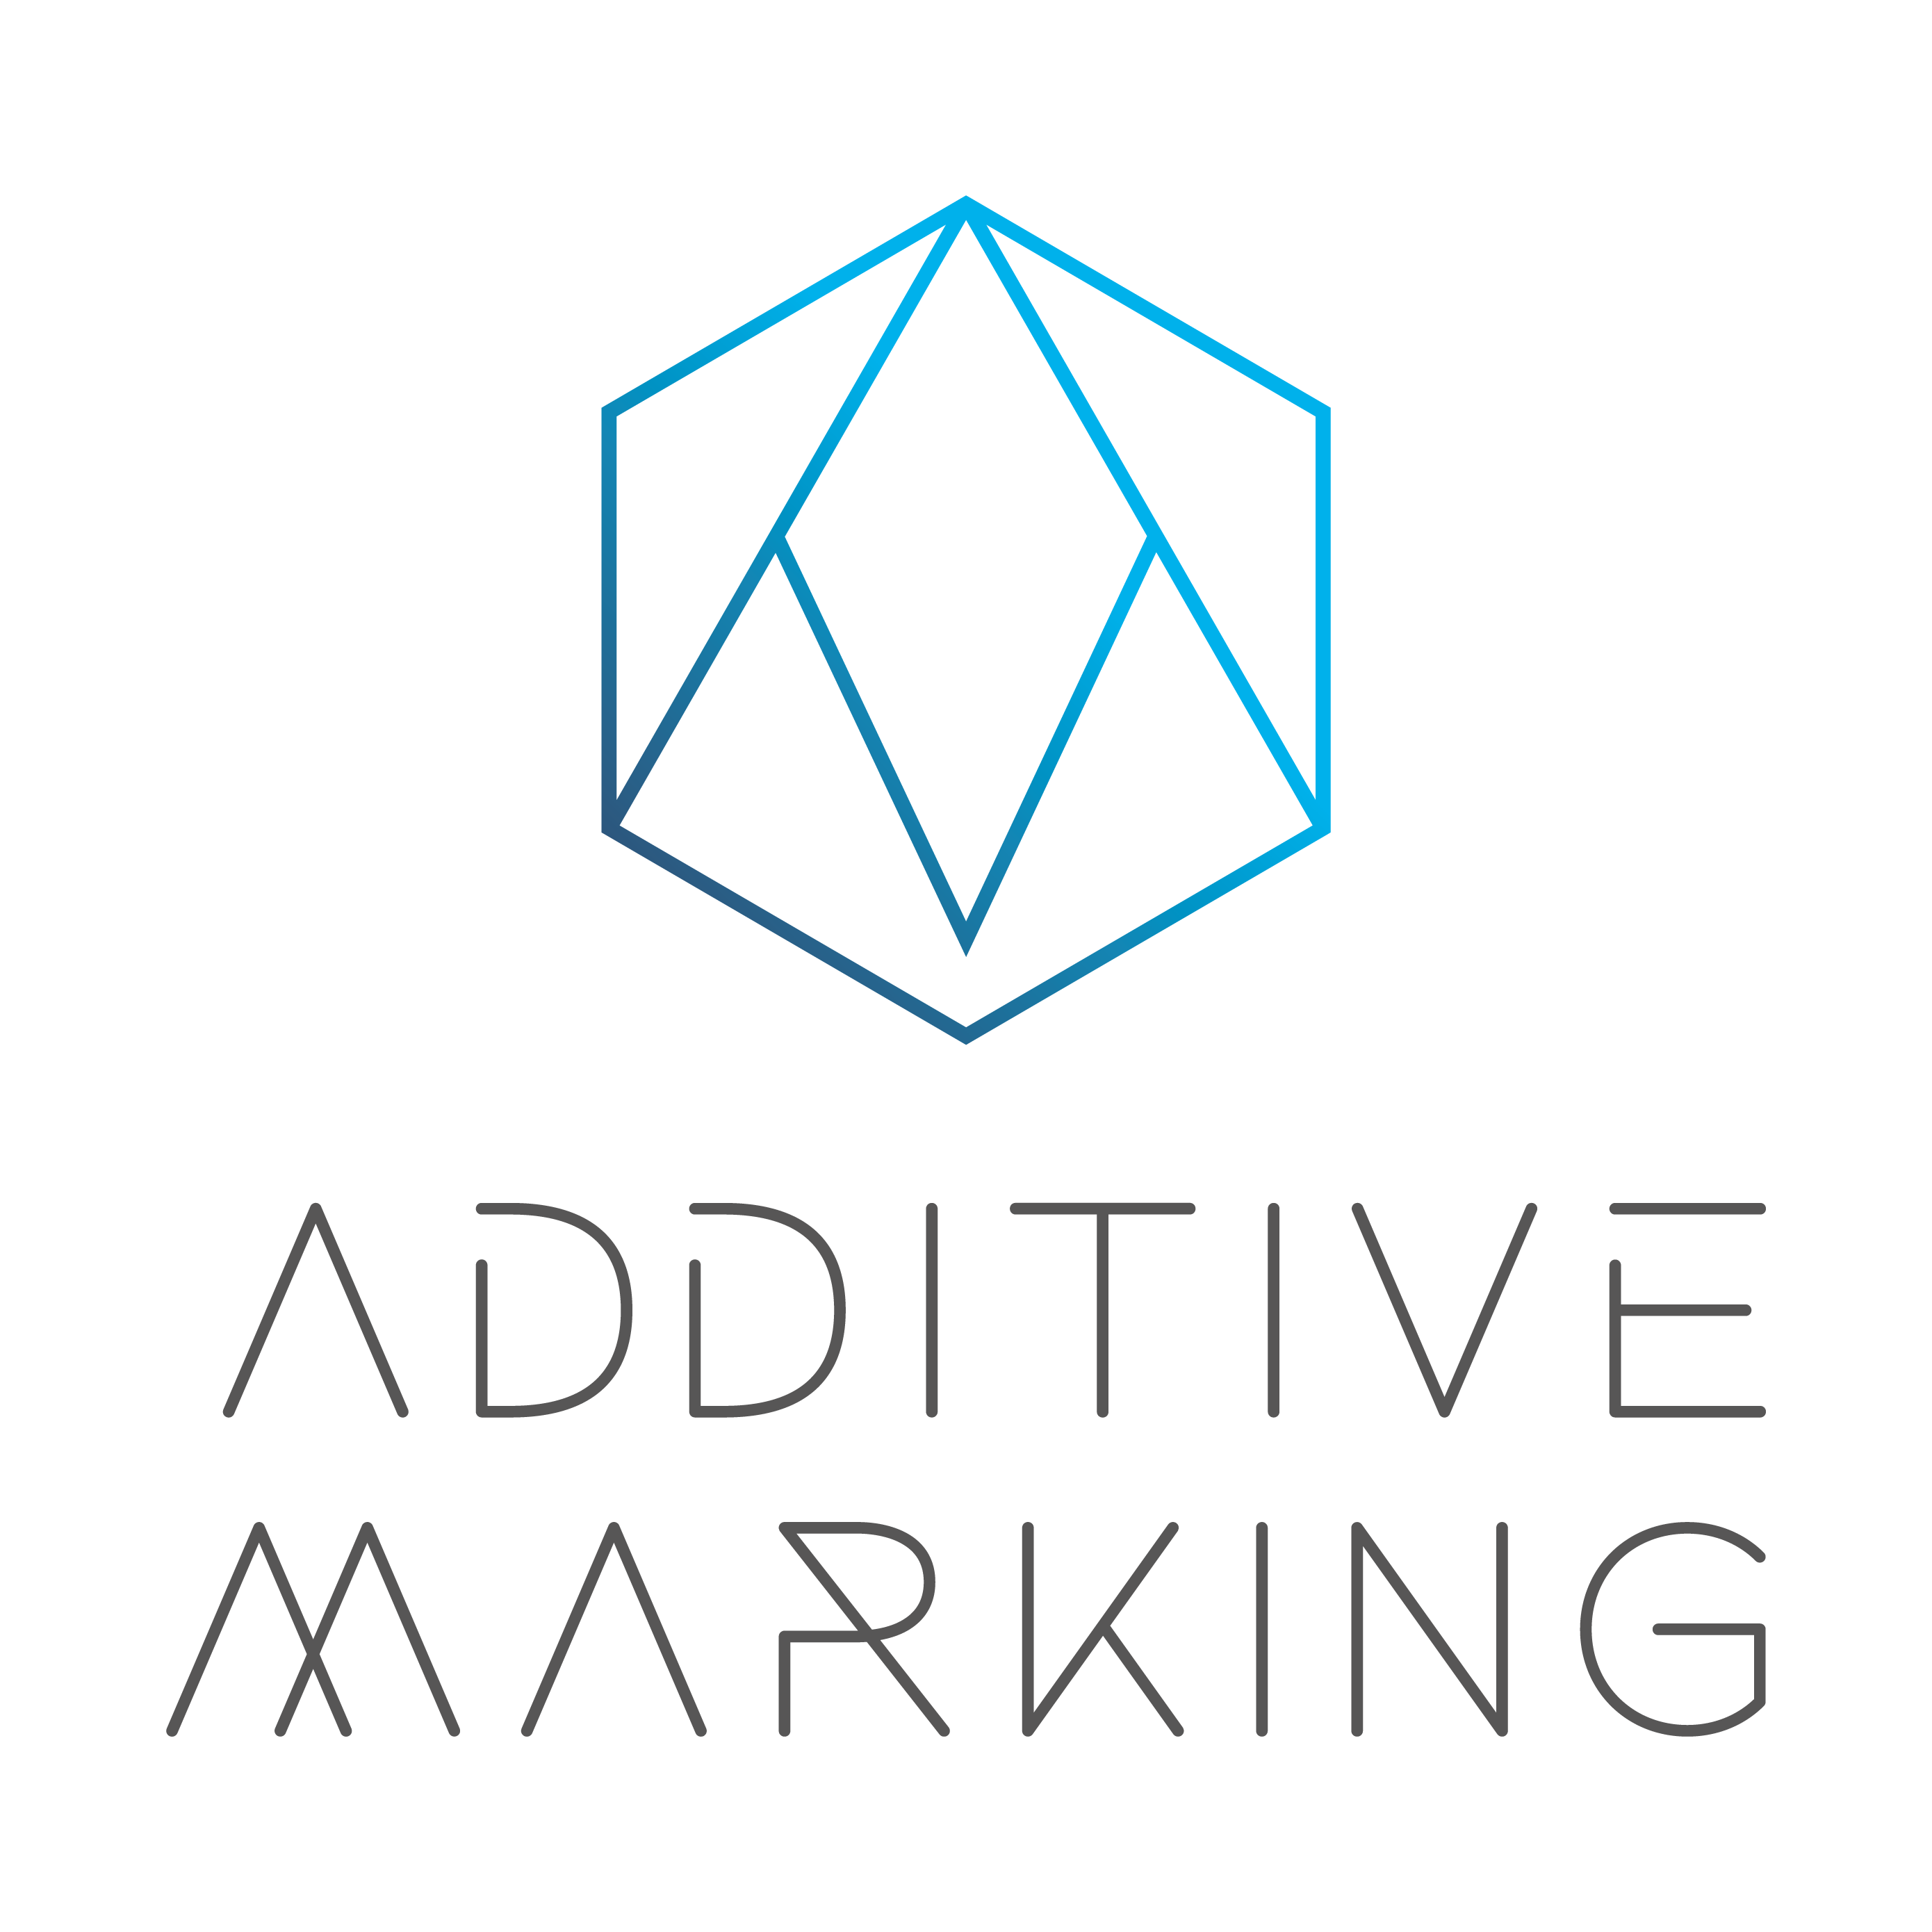 Additive Marking